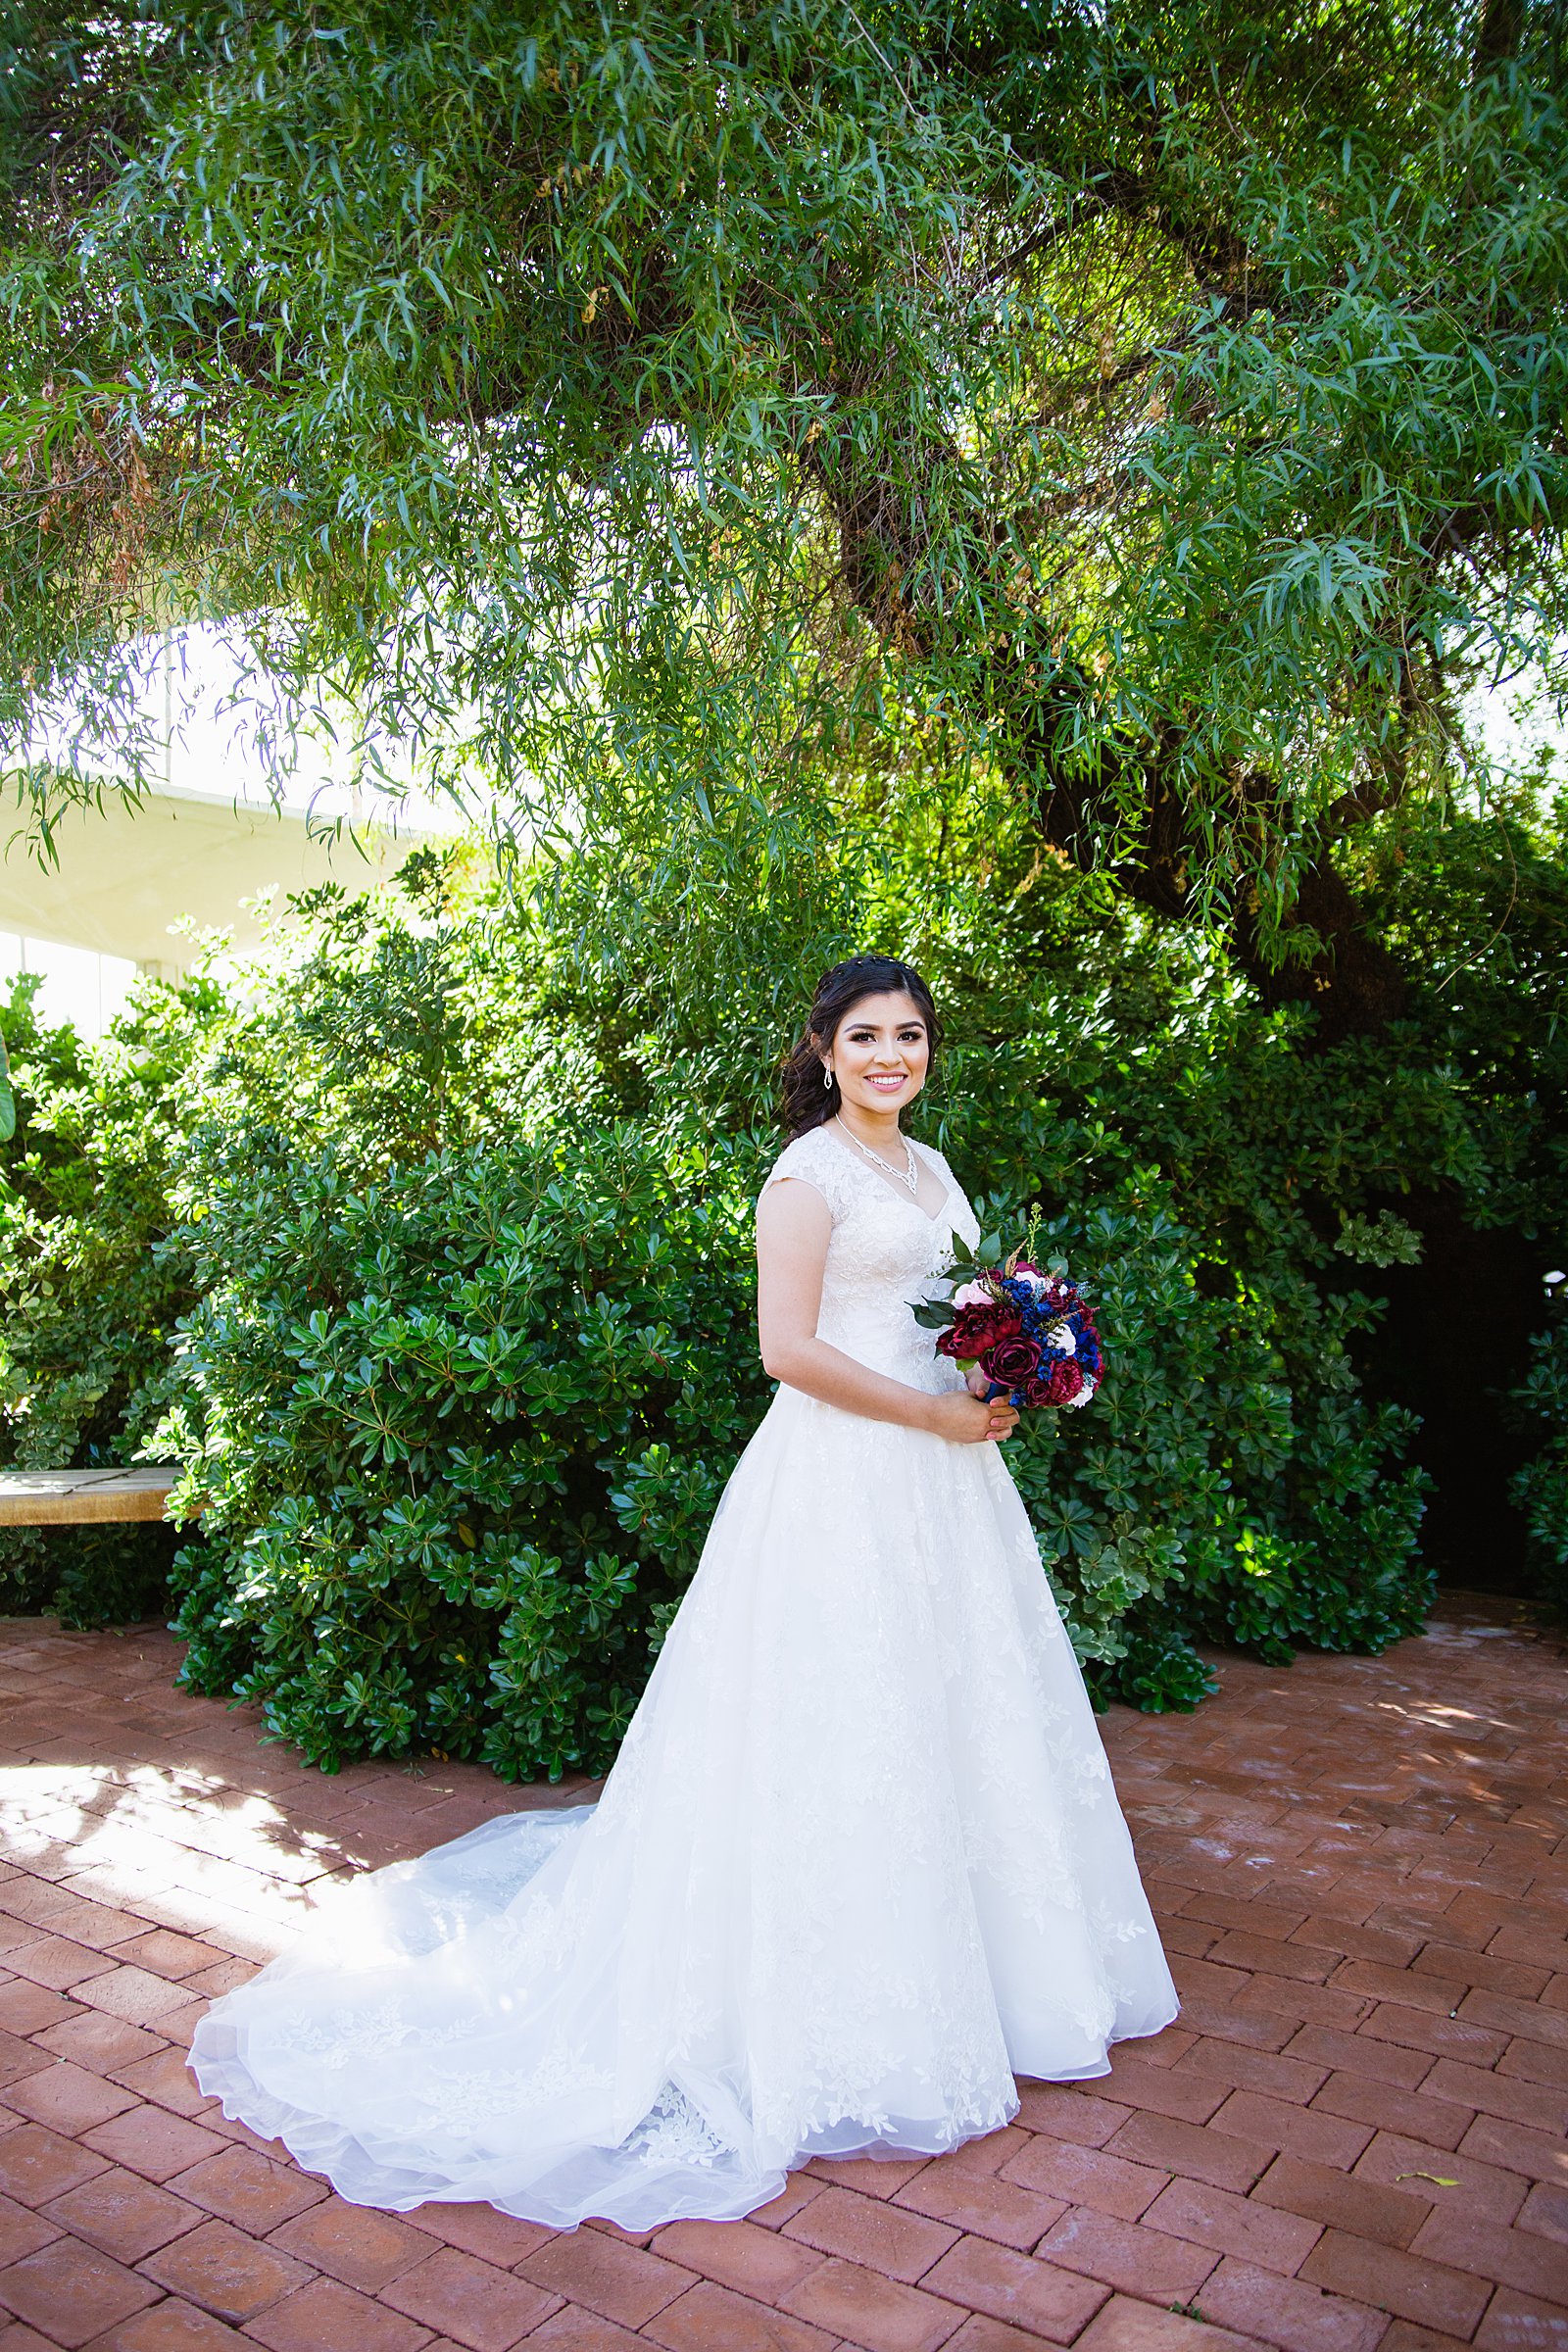 Bride's simple garden wedding dress for her Valley Garden Center wedding by PMA Photography.